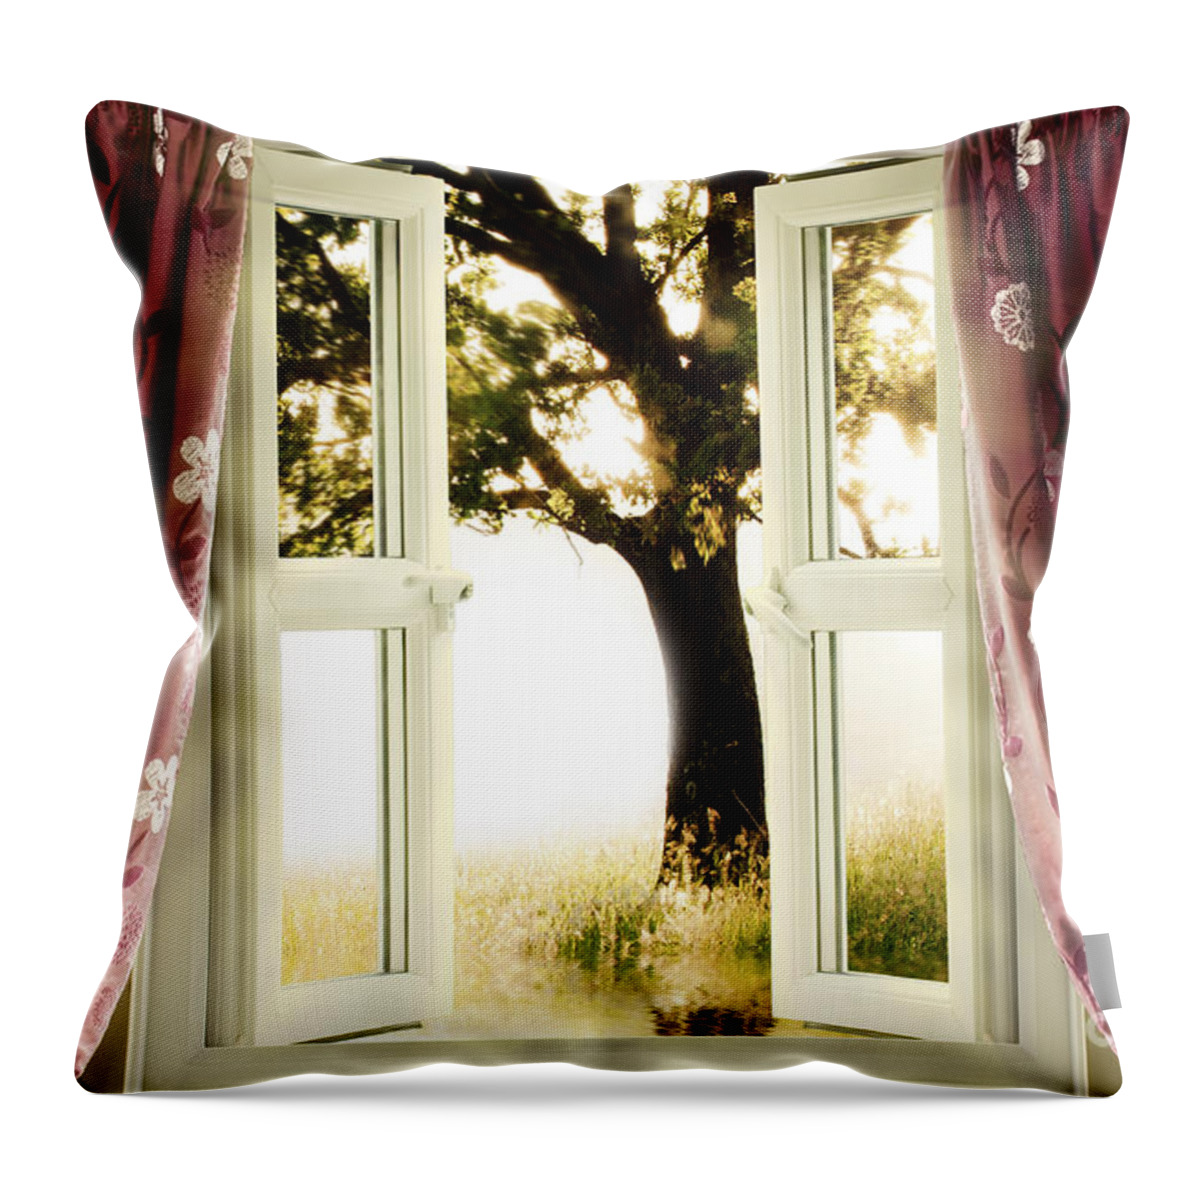 Window Throw Pillow featuring the photograph Open window to tree by Simon Bratt